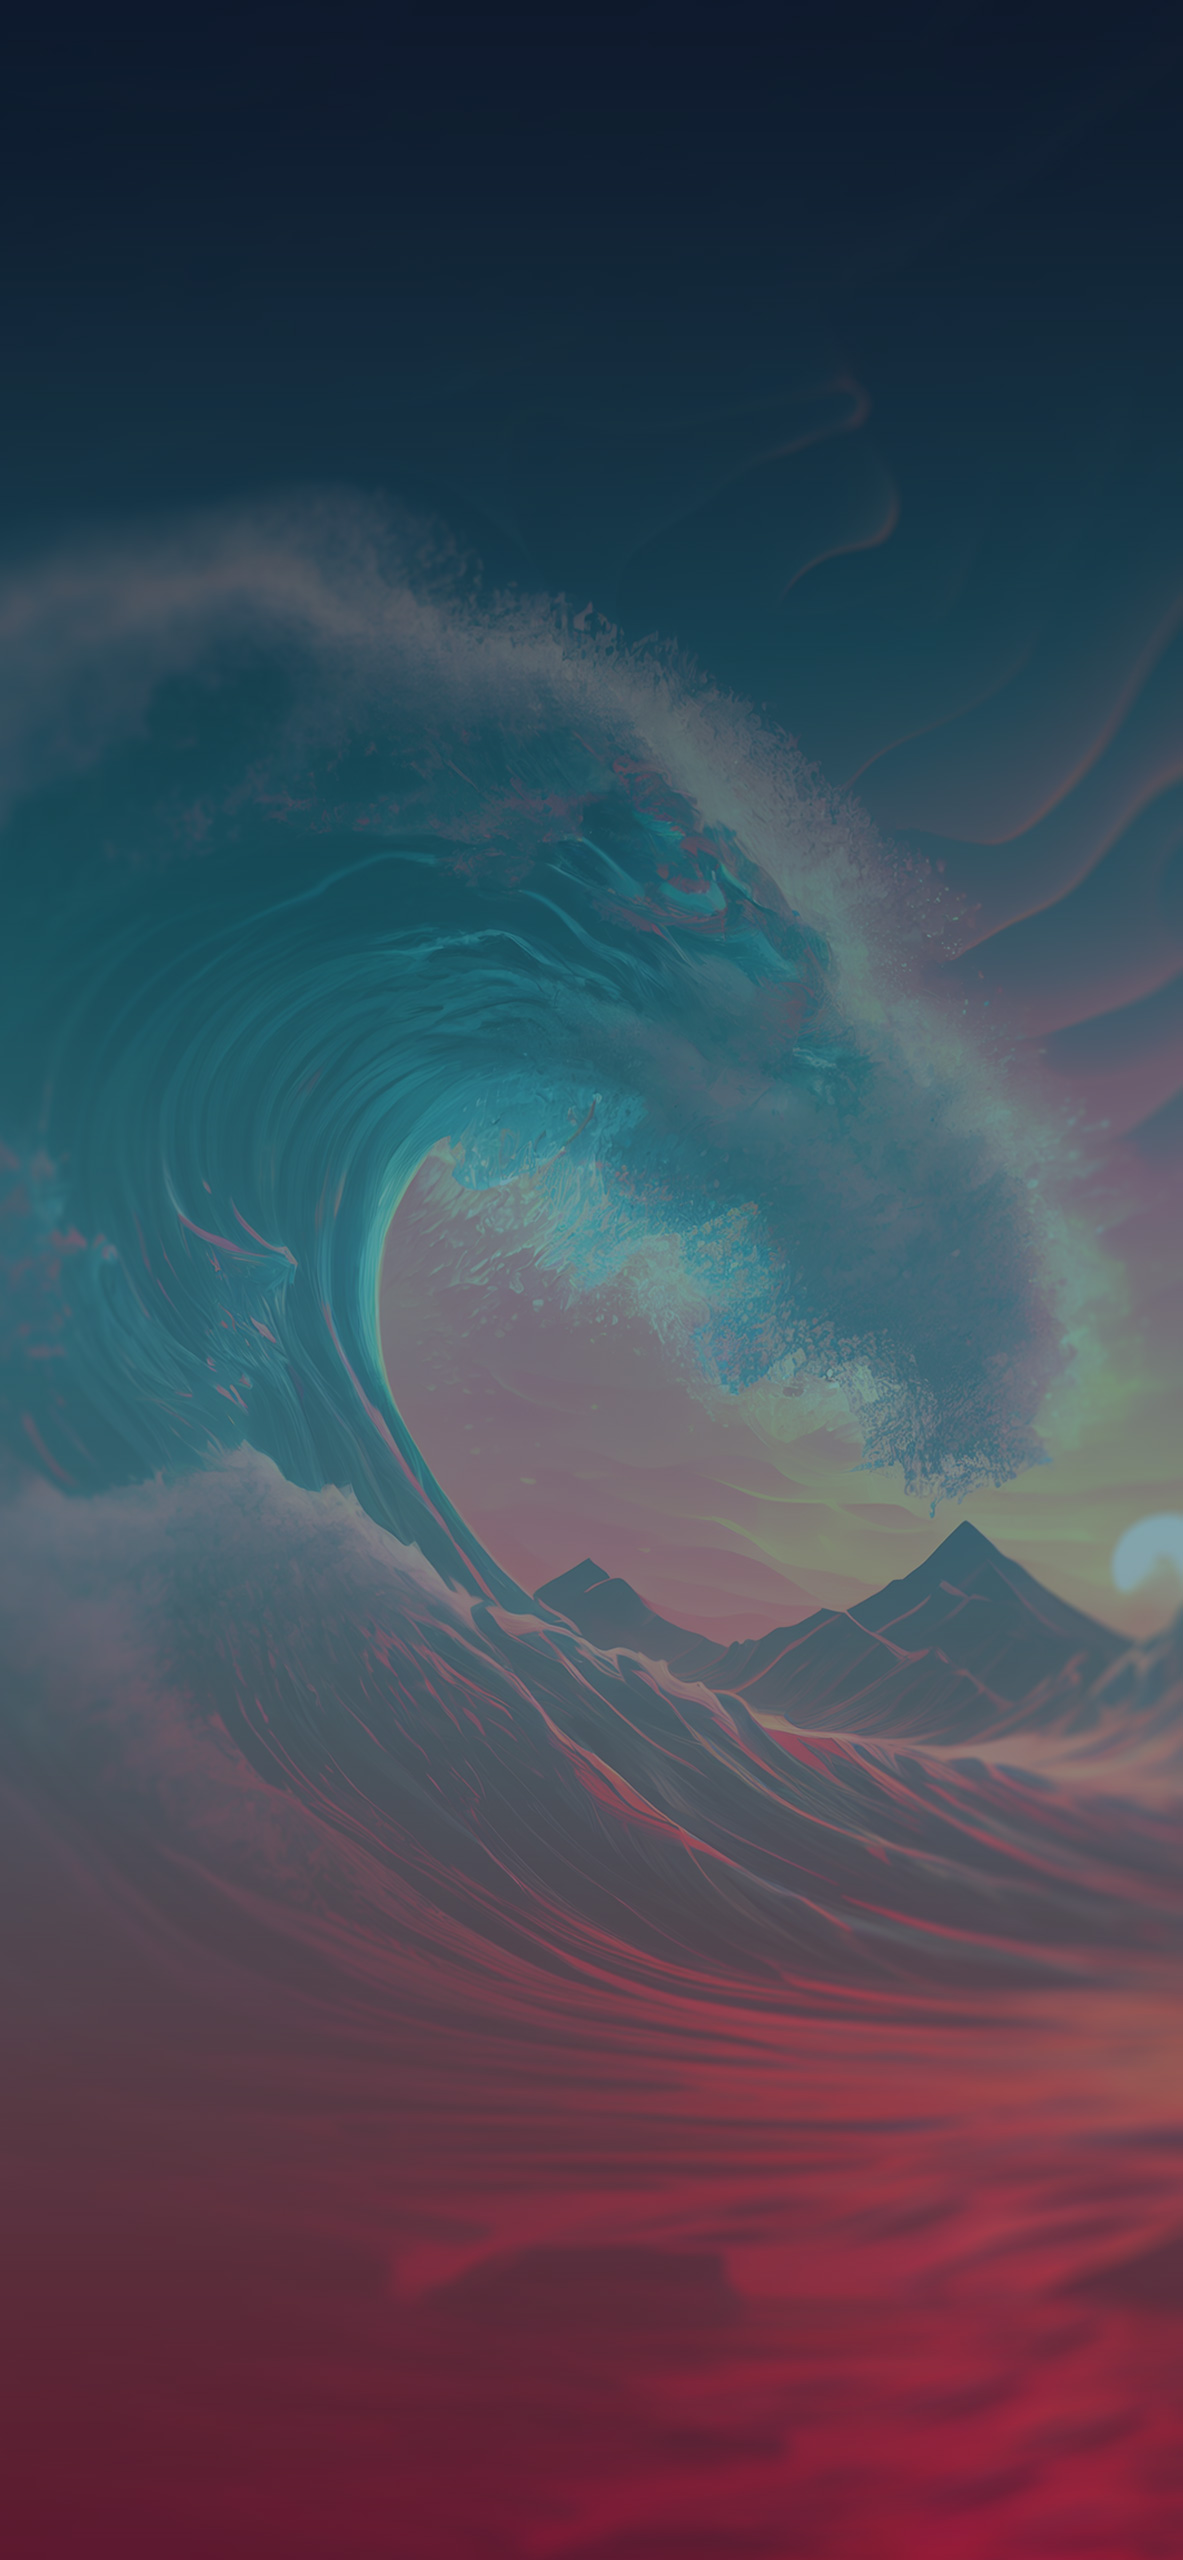 ocean wave sunset background